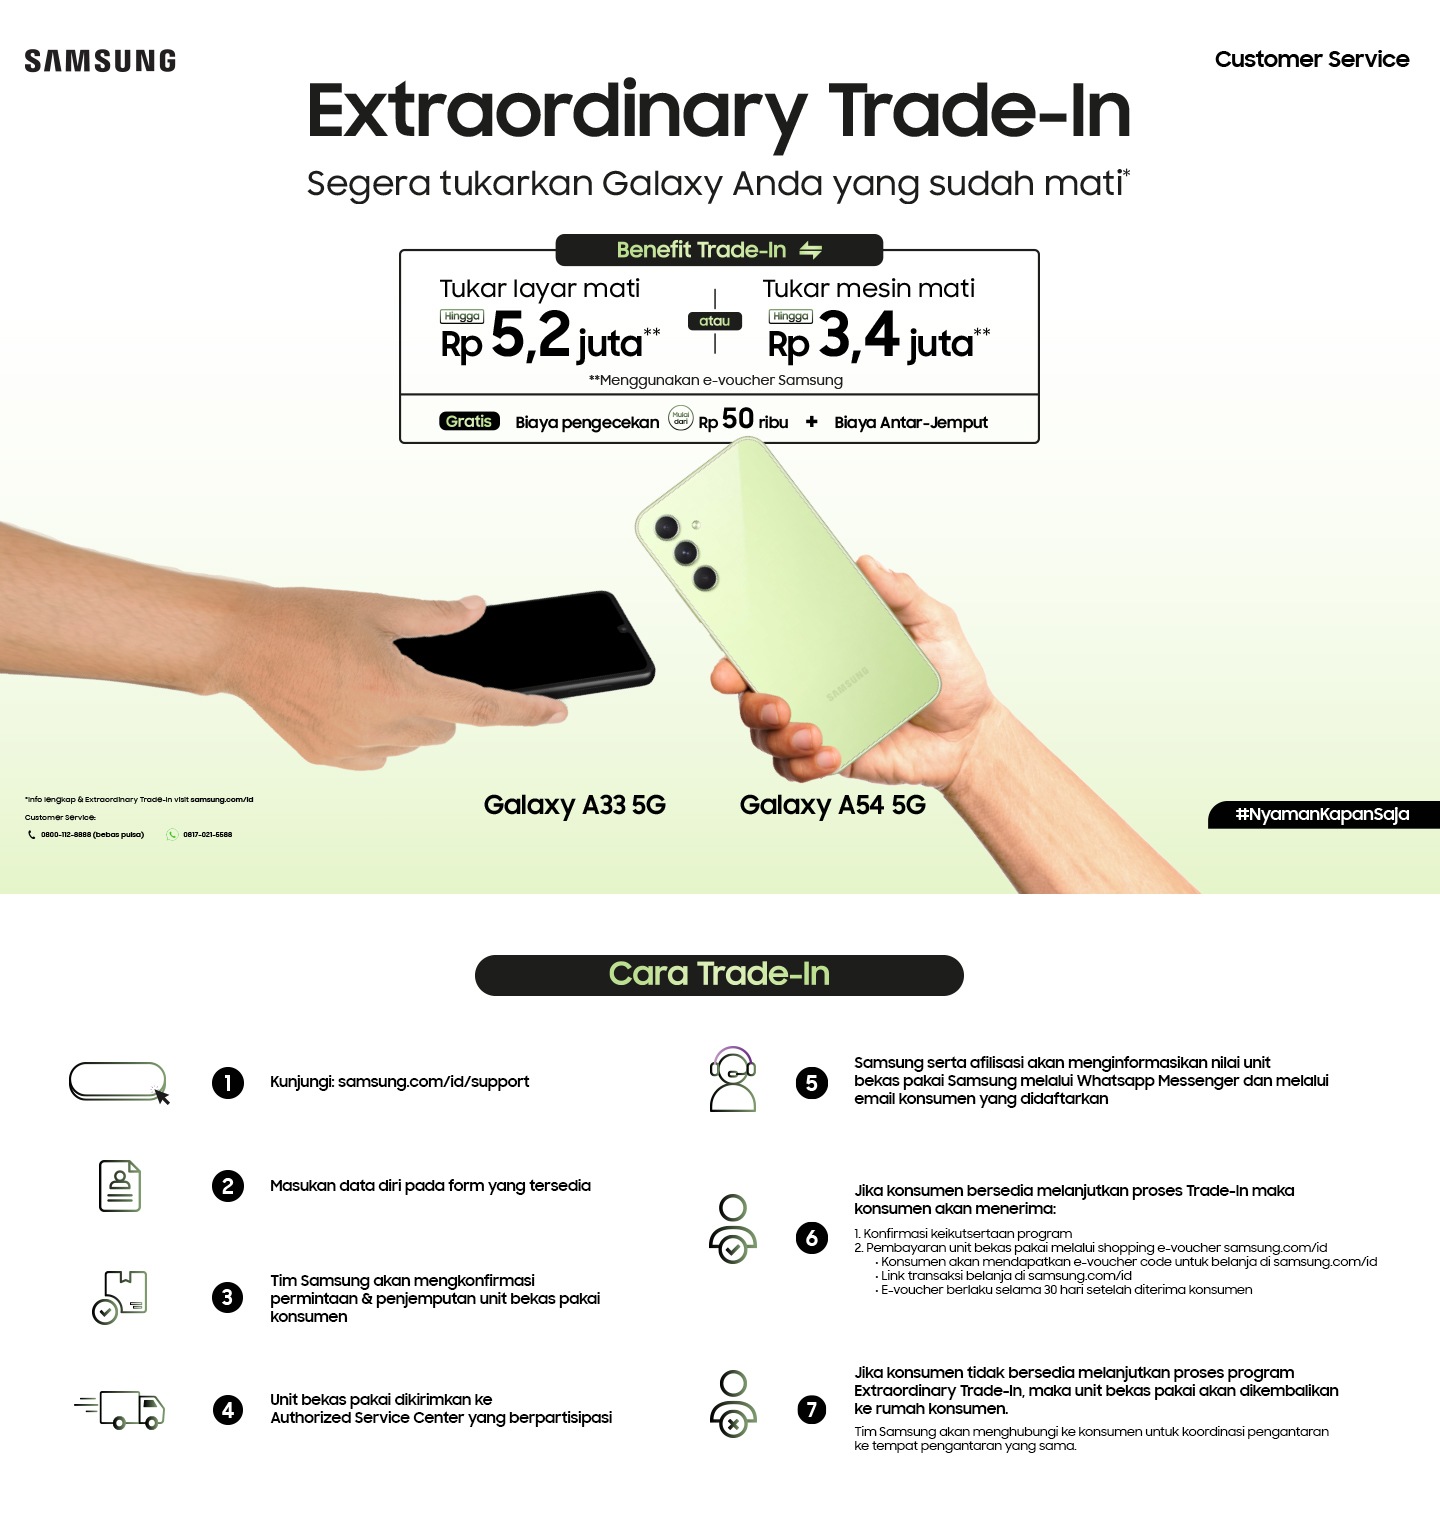 Samsung Extraordinary Trade-In